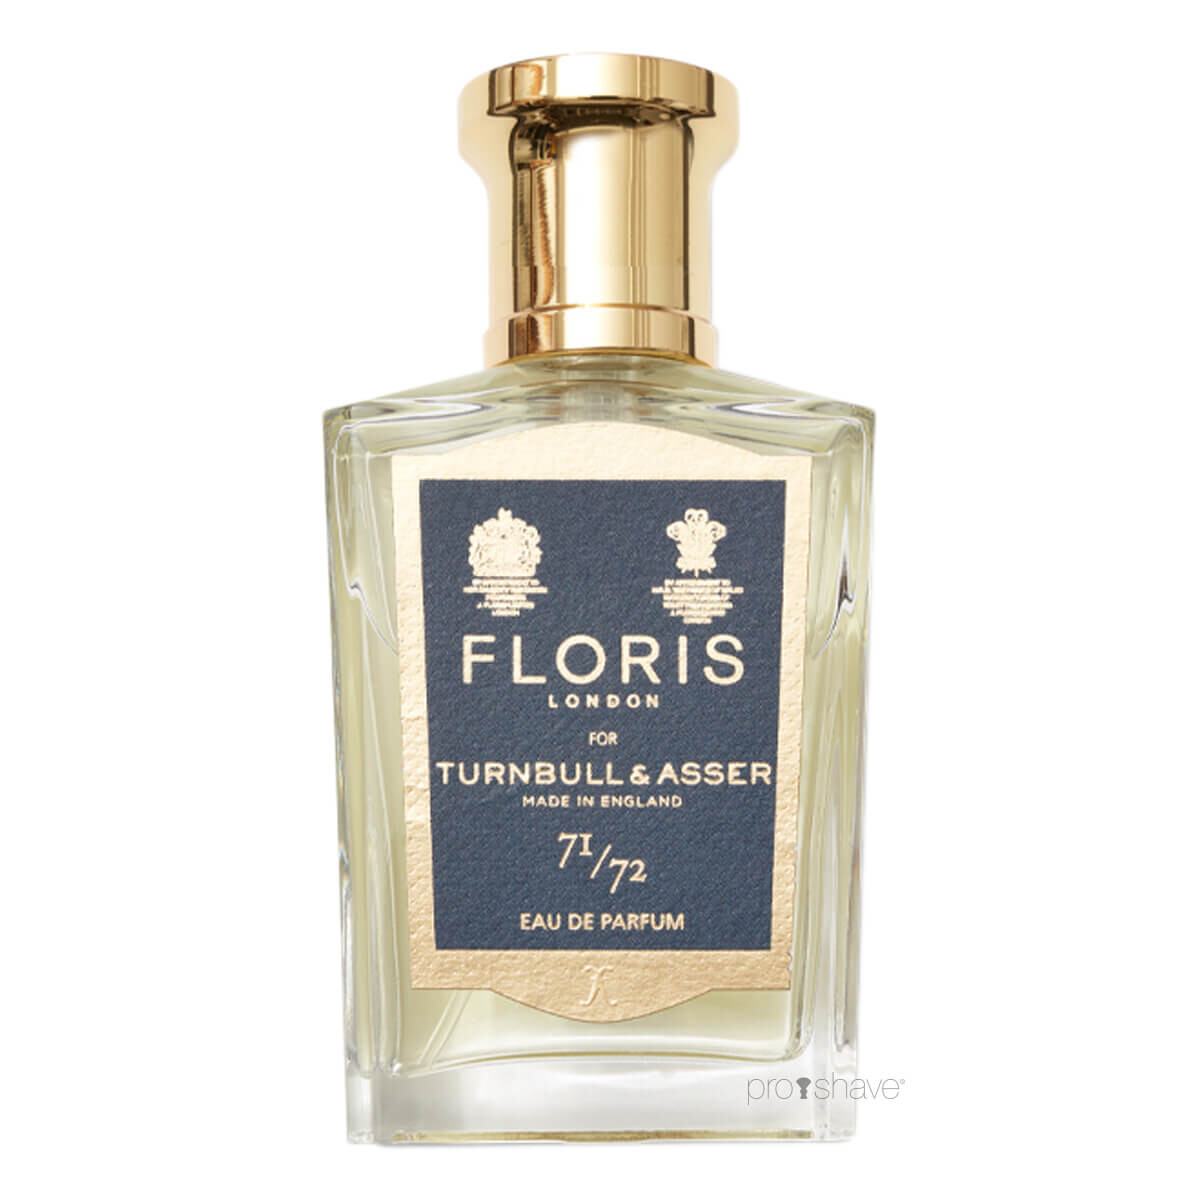 Billede af Floris x Turnbull & Asser 71/72, Eau de Parfum, 50 ml.